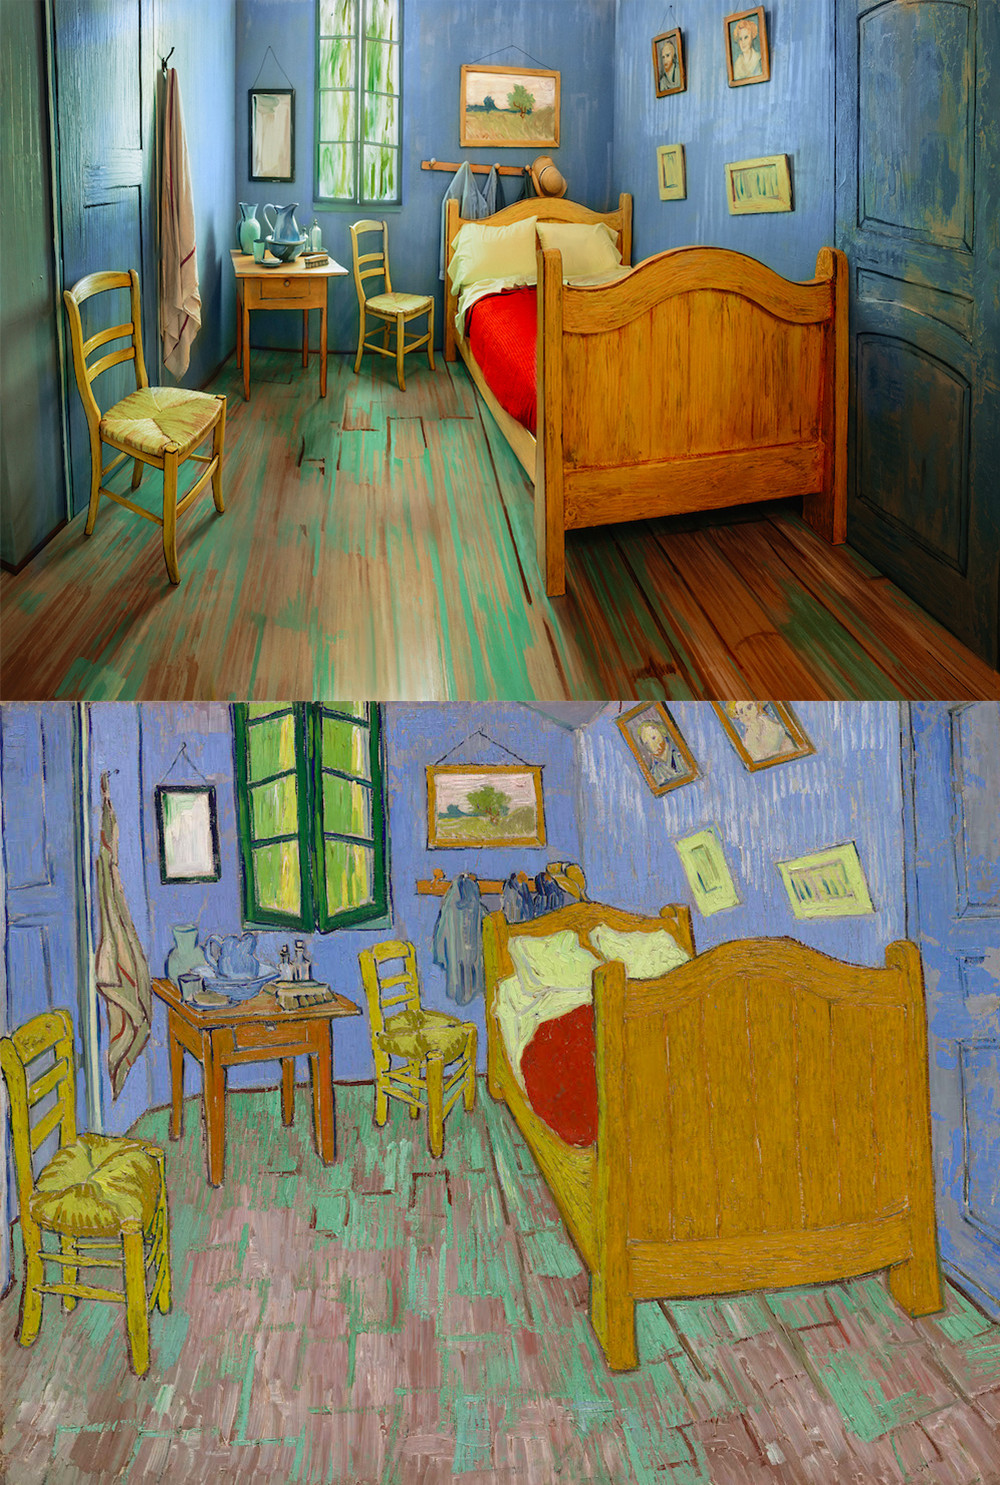 Van Gogh Bedroom Paintings
 The Art Institute of Chicago Recreates Van Gogh’s Famous